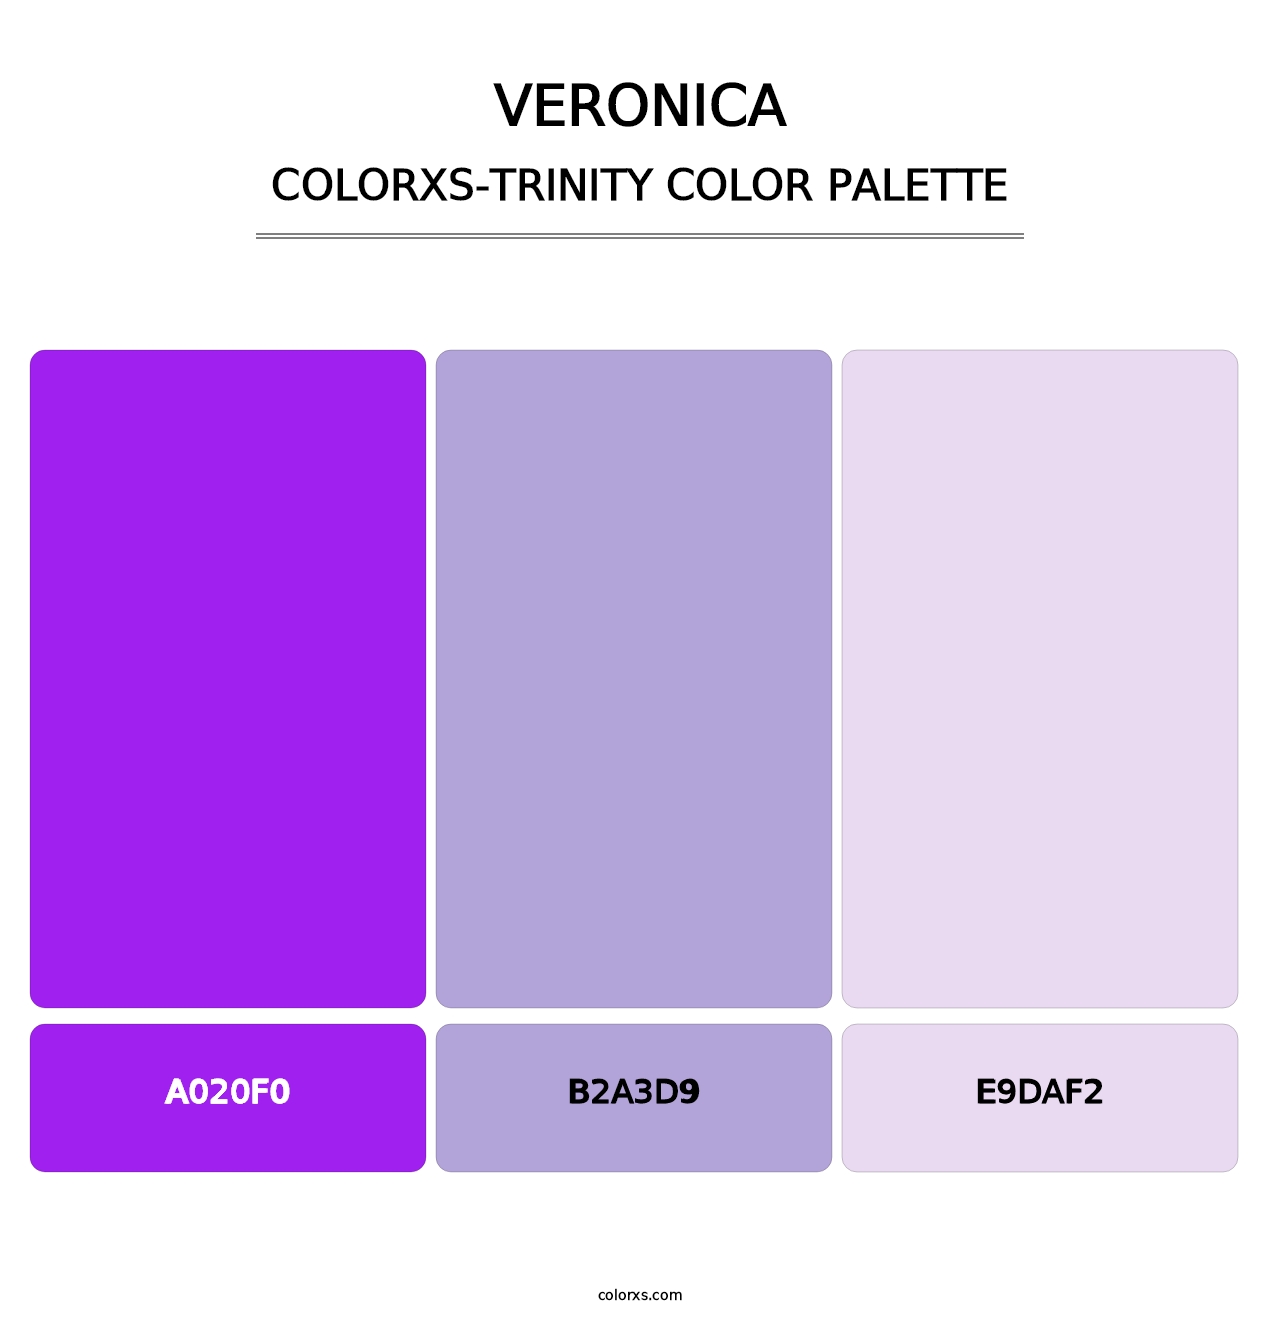 Veronica - Colorxs Trinity Palette